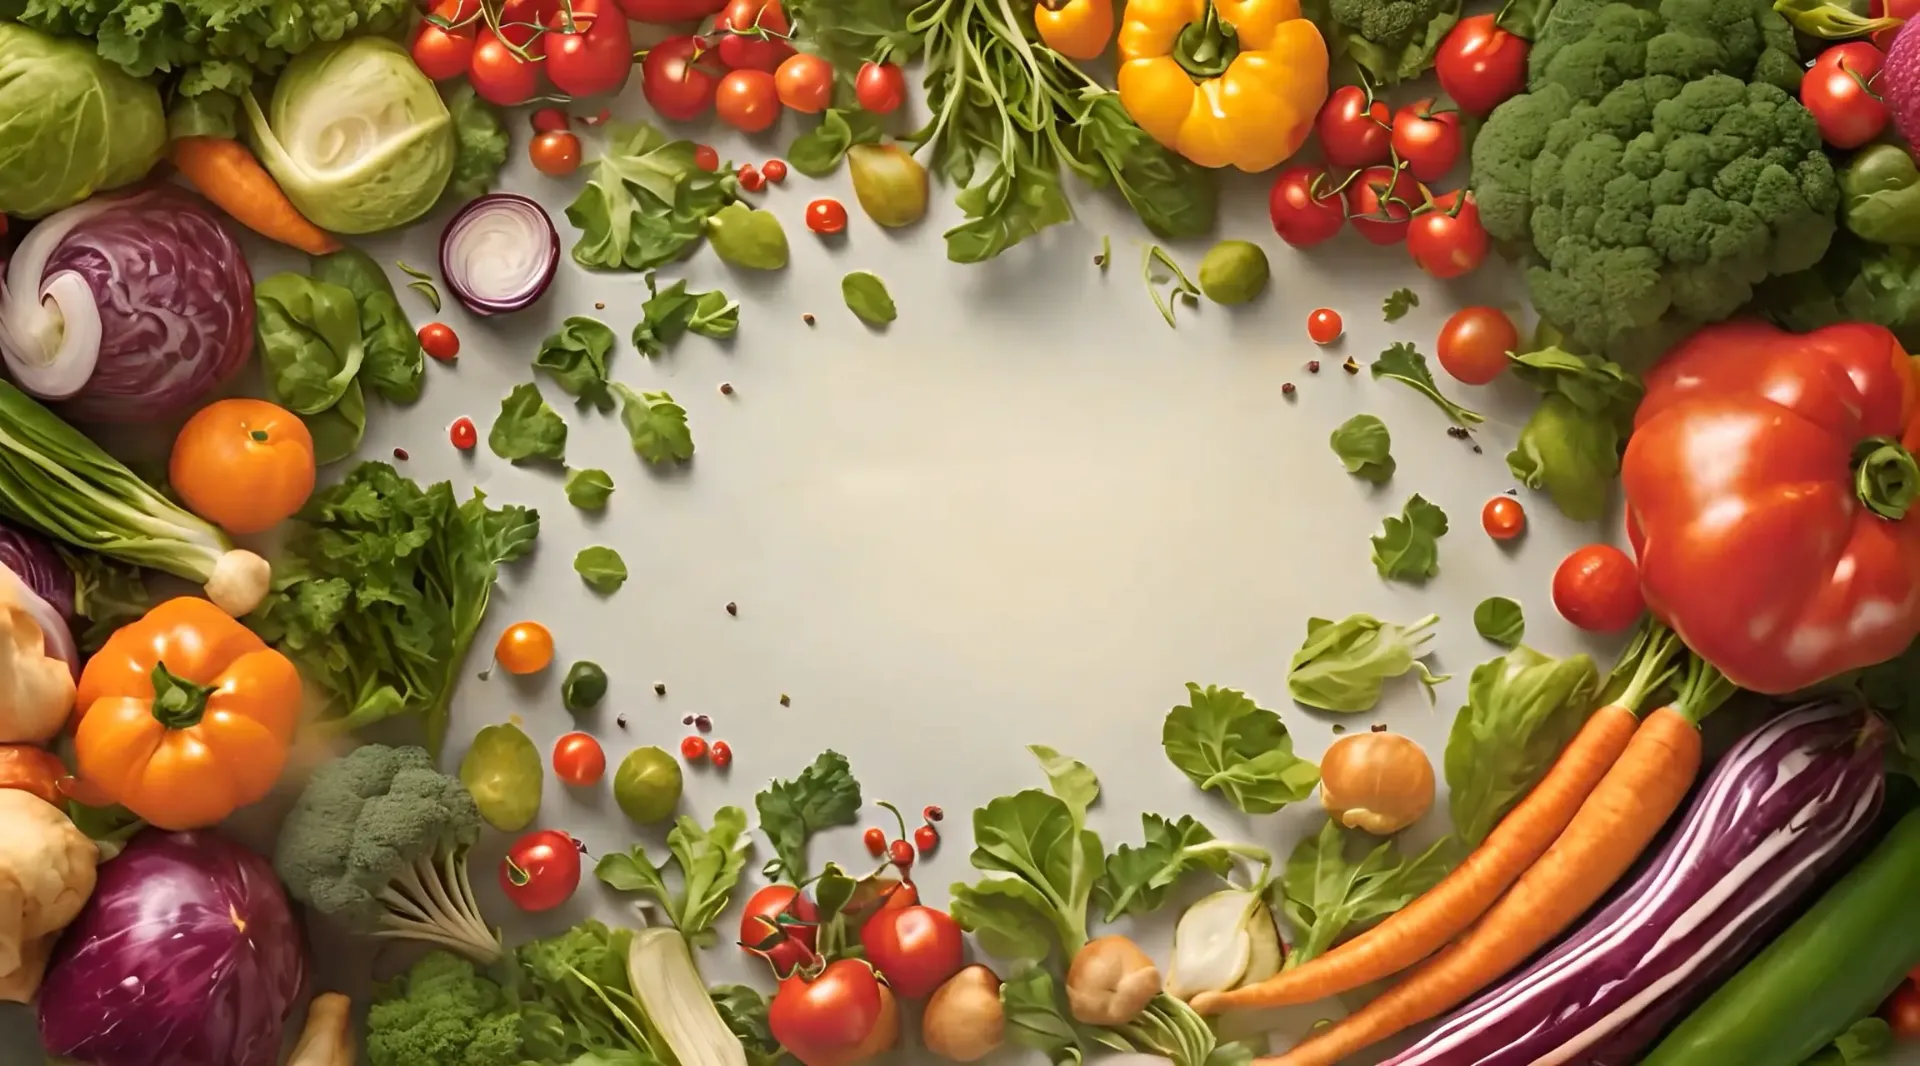 Vibrant Vegetable Harvest Video Clip Backdrop